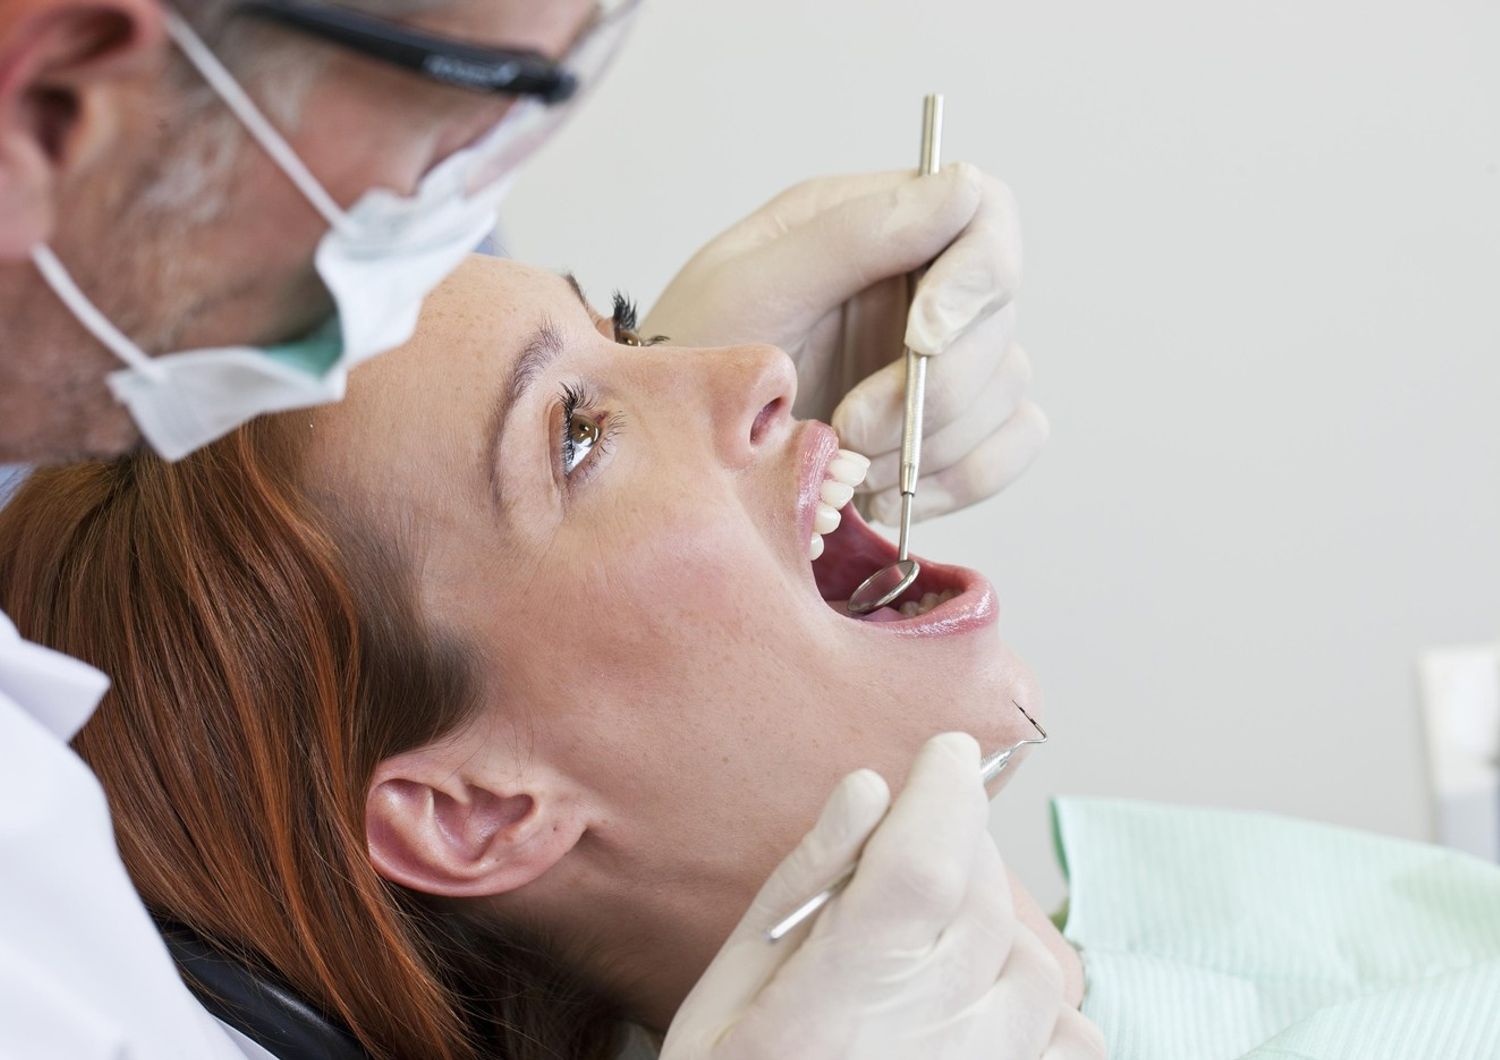 &nbsp;Dentista, dentisti, studi odontoiatrici, denti, cure dentistiche (Agf)